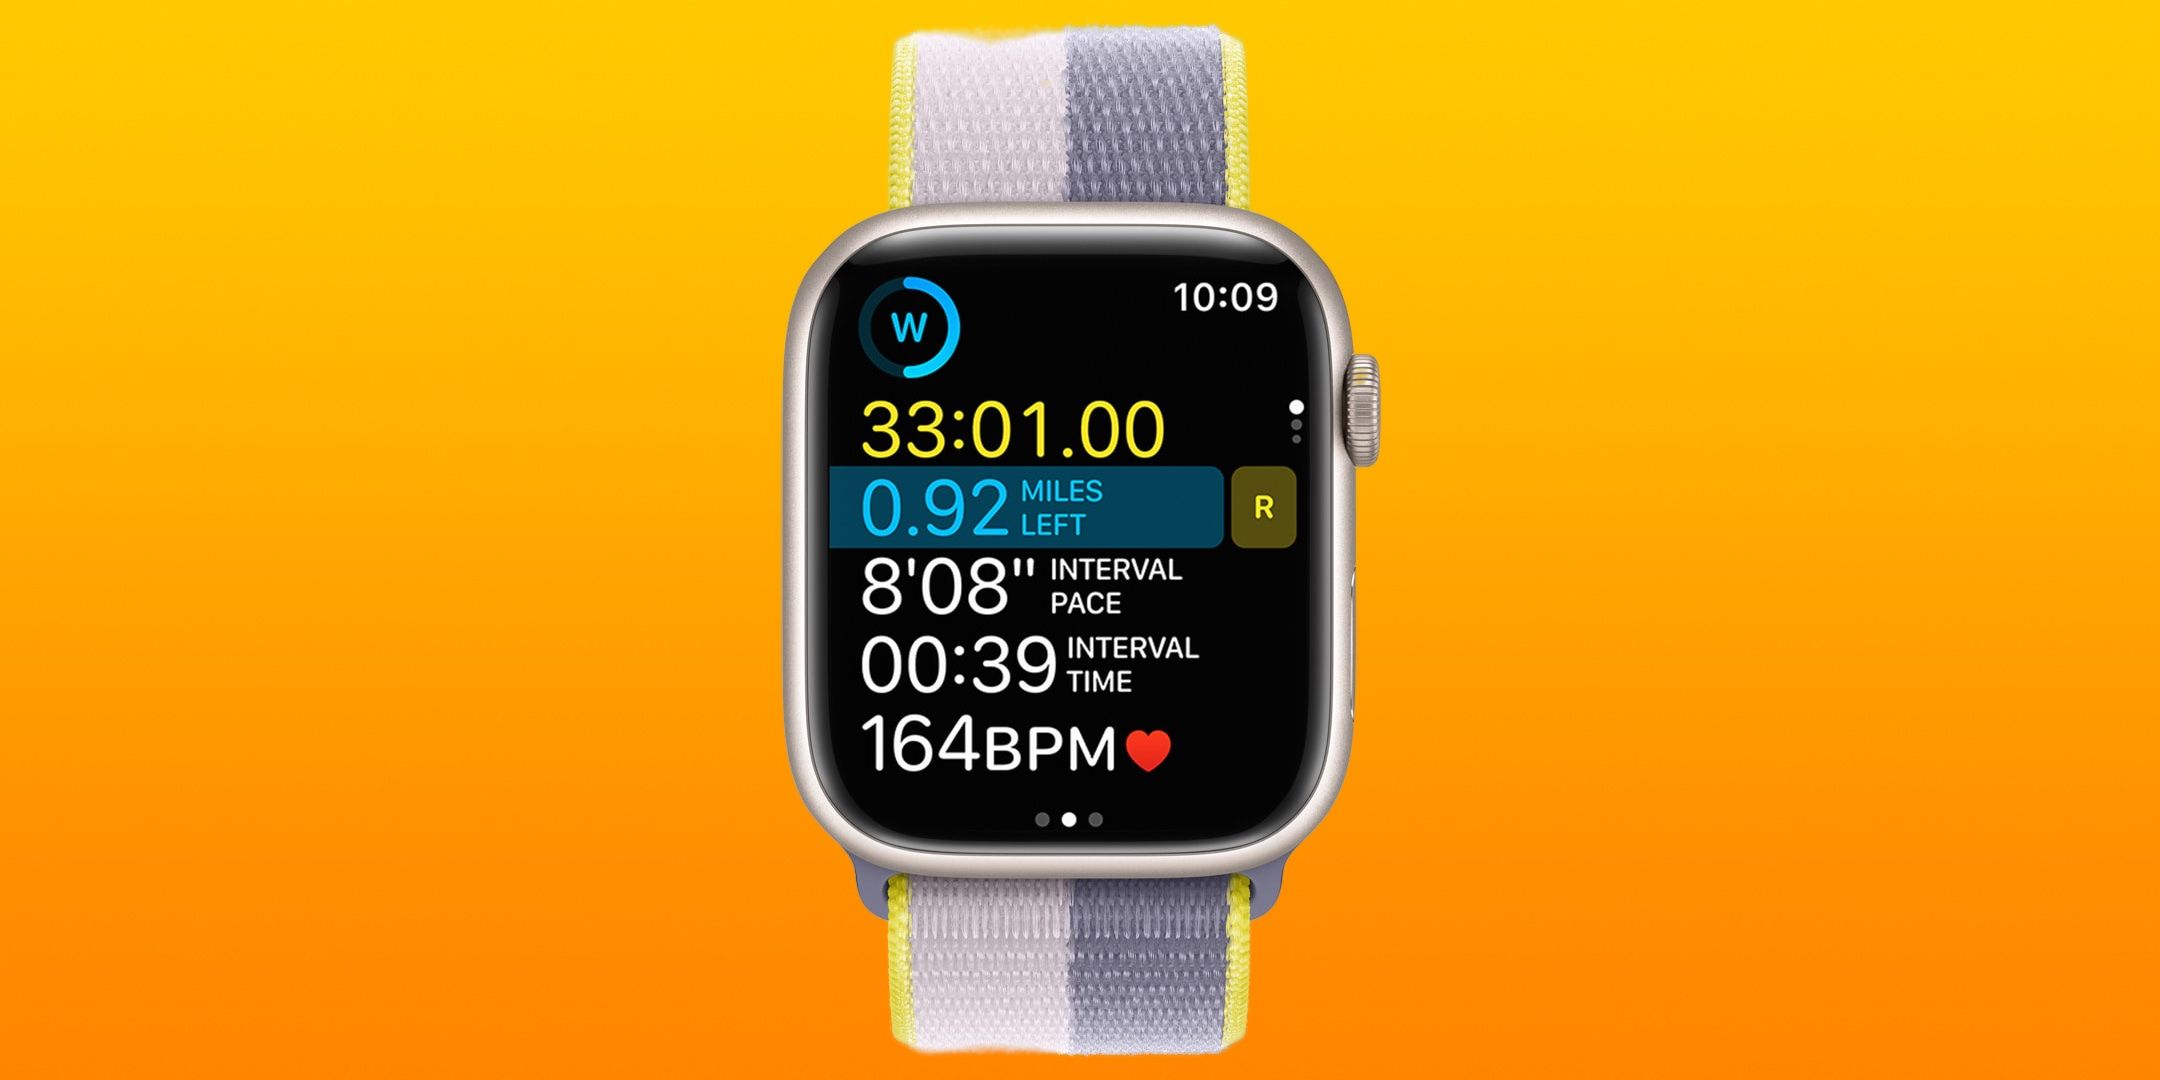 Apple Watch Interval training screen.